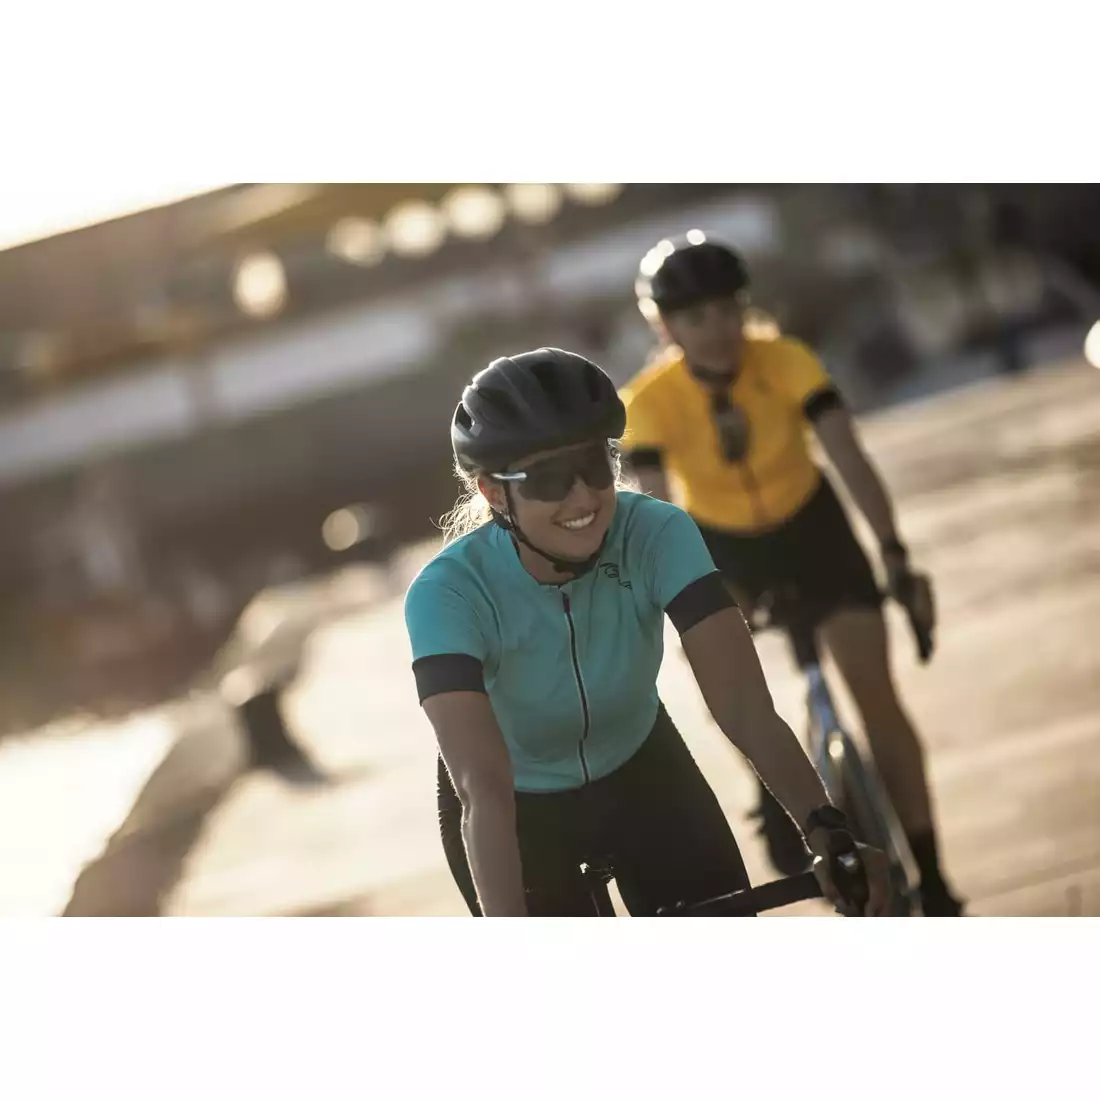 Rogelli MODESTA women's cycling jersey, turquoise-black